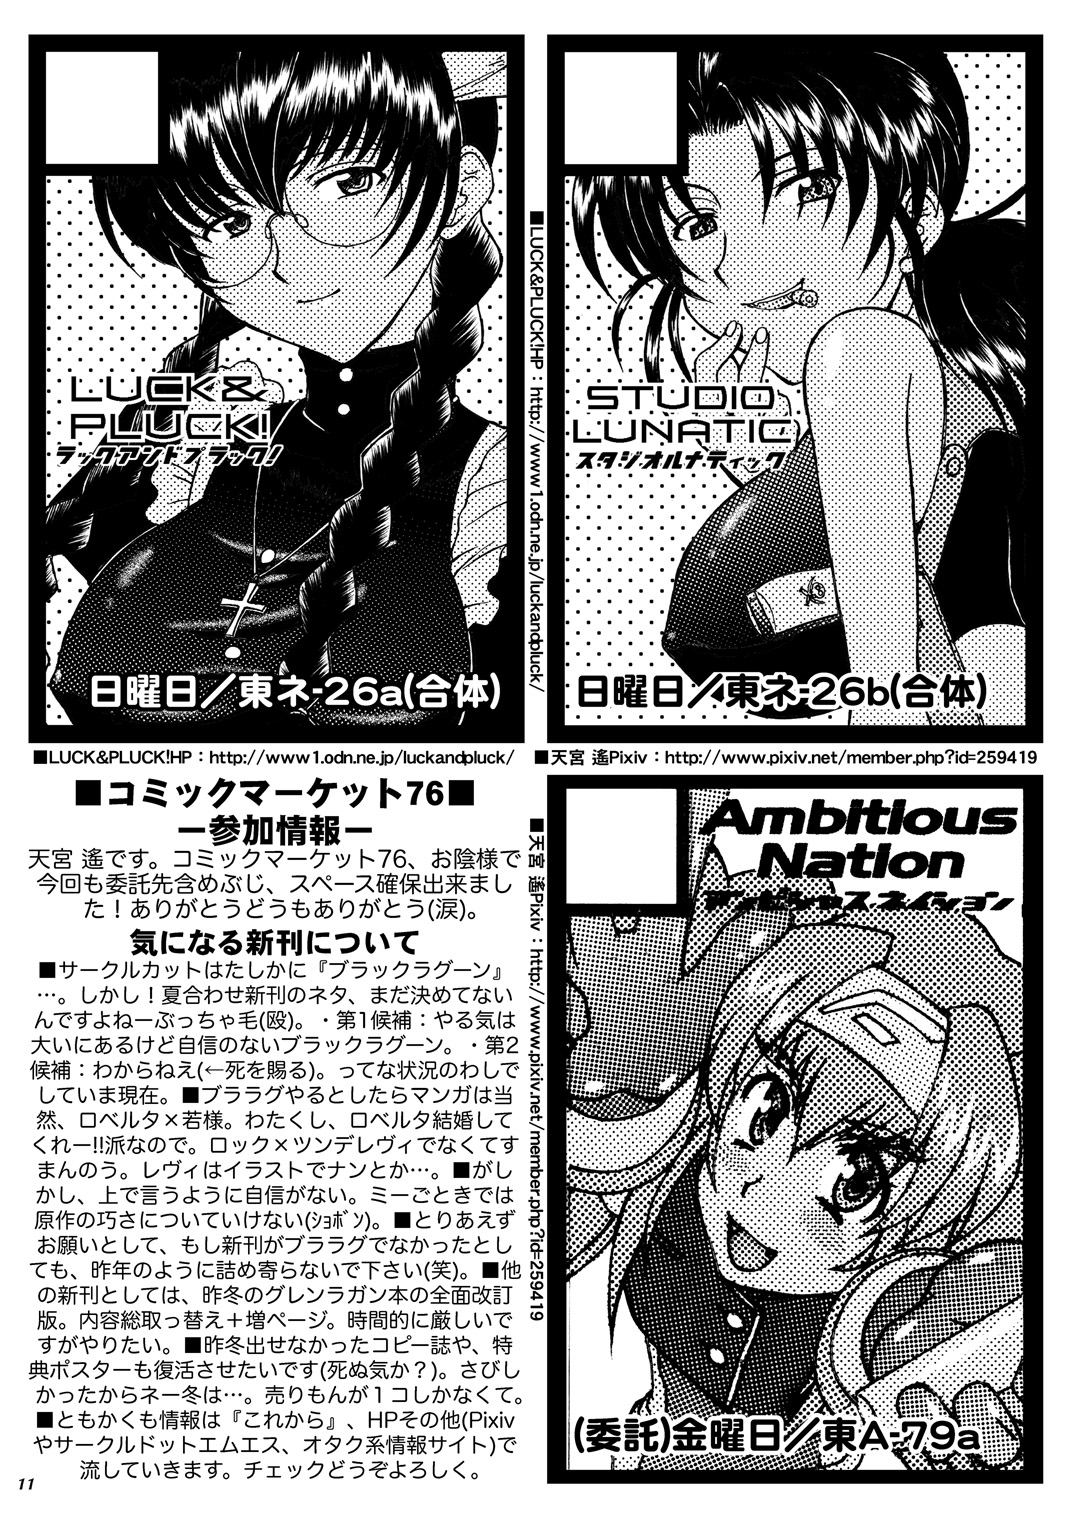 [Ananomiya Haruka]「オレたちシーリん族」・「まいどオブリガート」・「INCOMPLETE」3誌セット